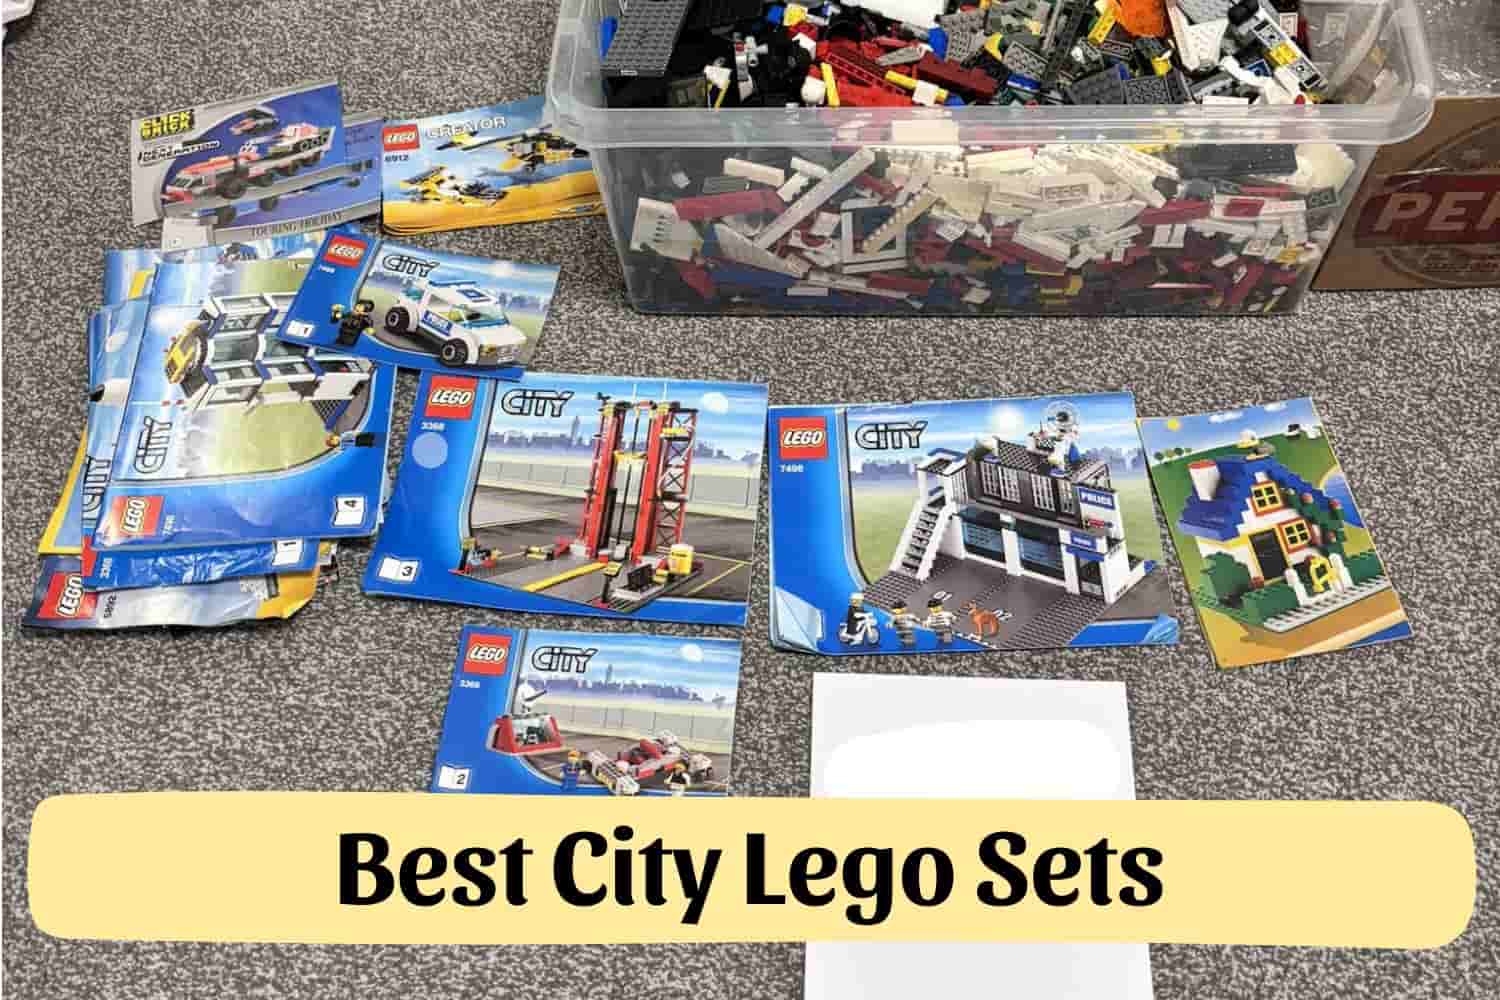 Best City Lego Sets